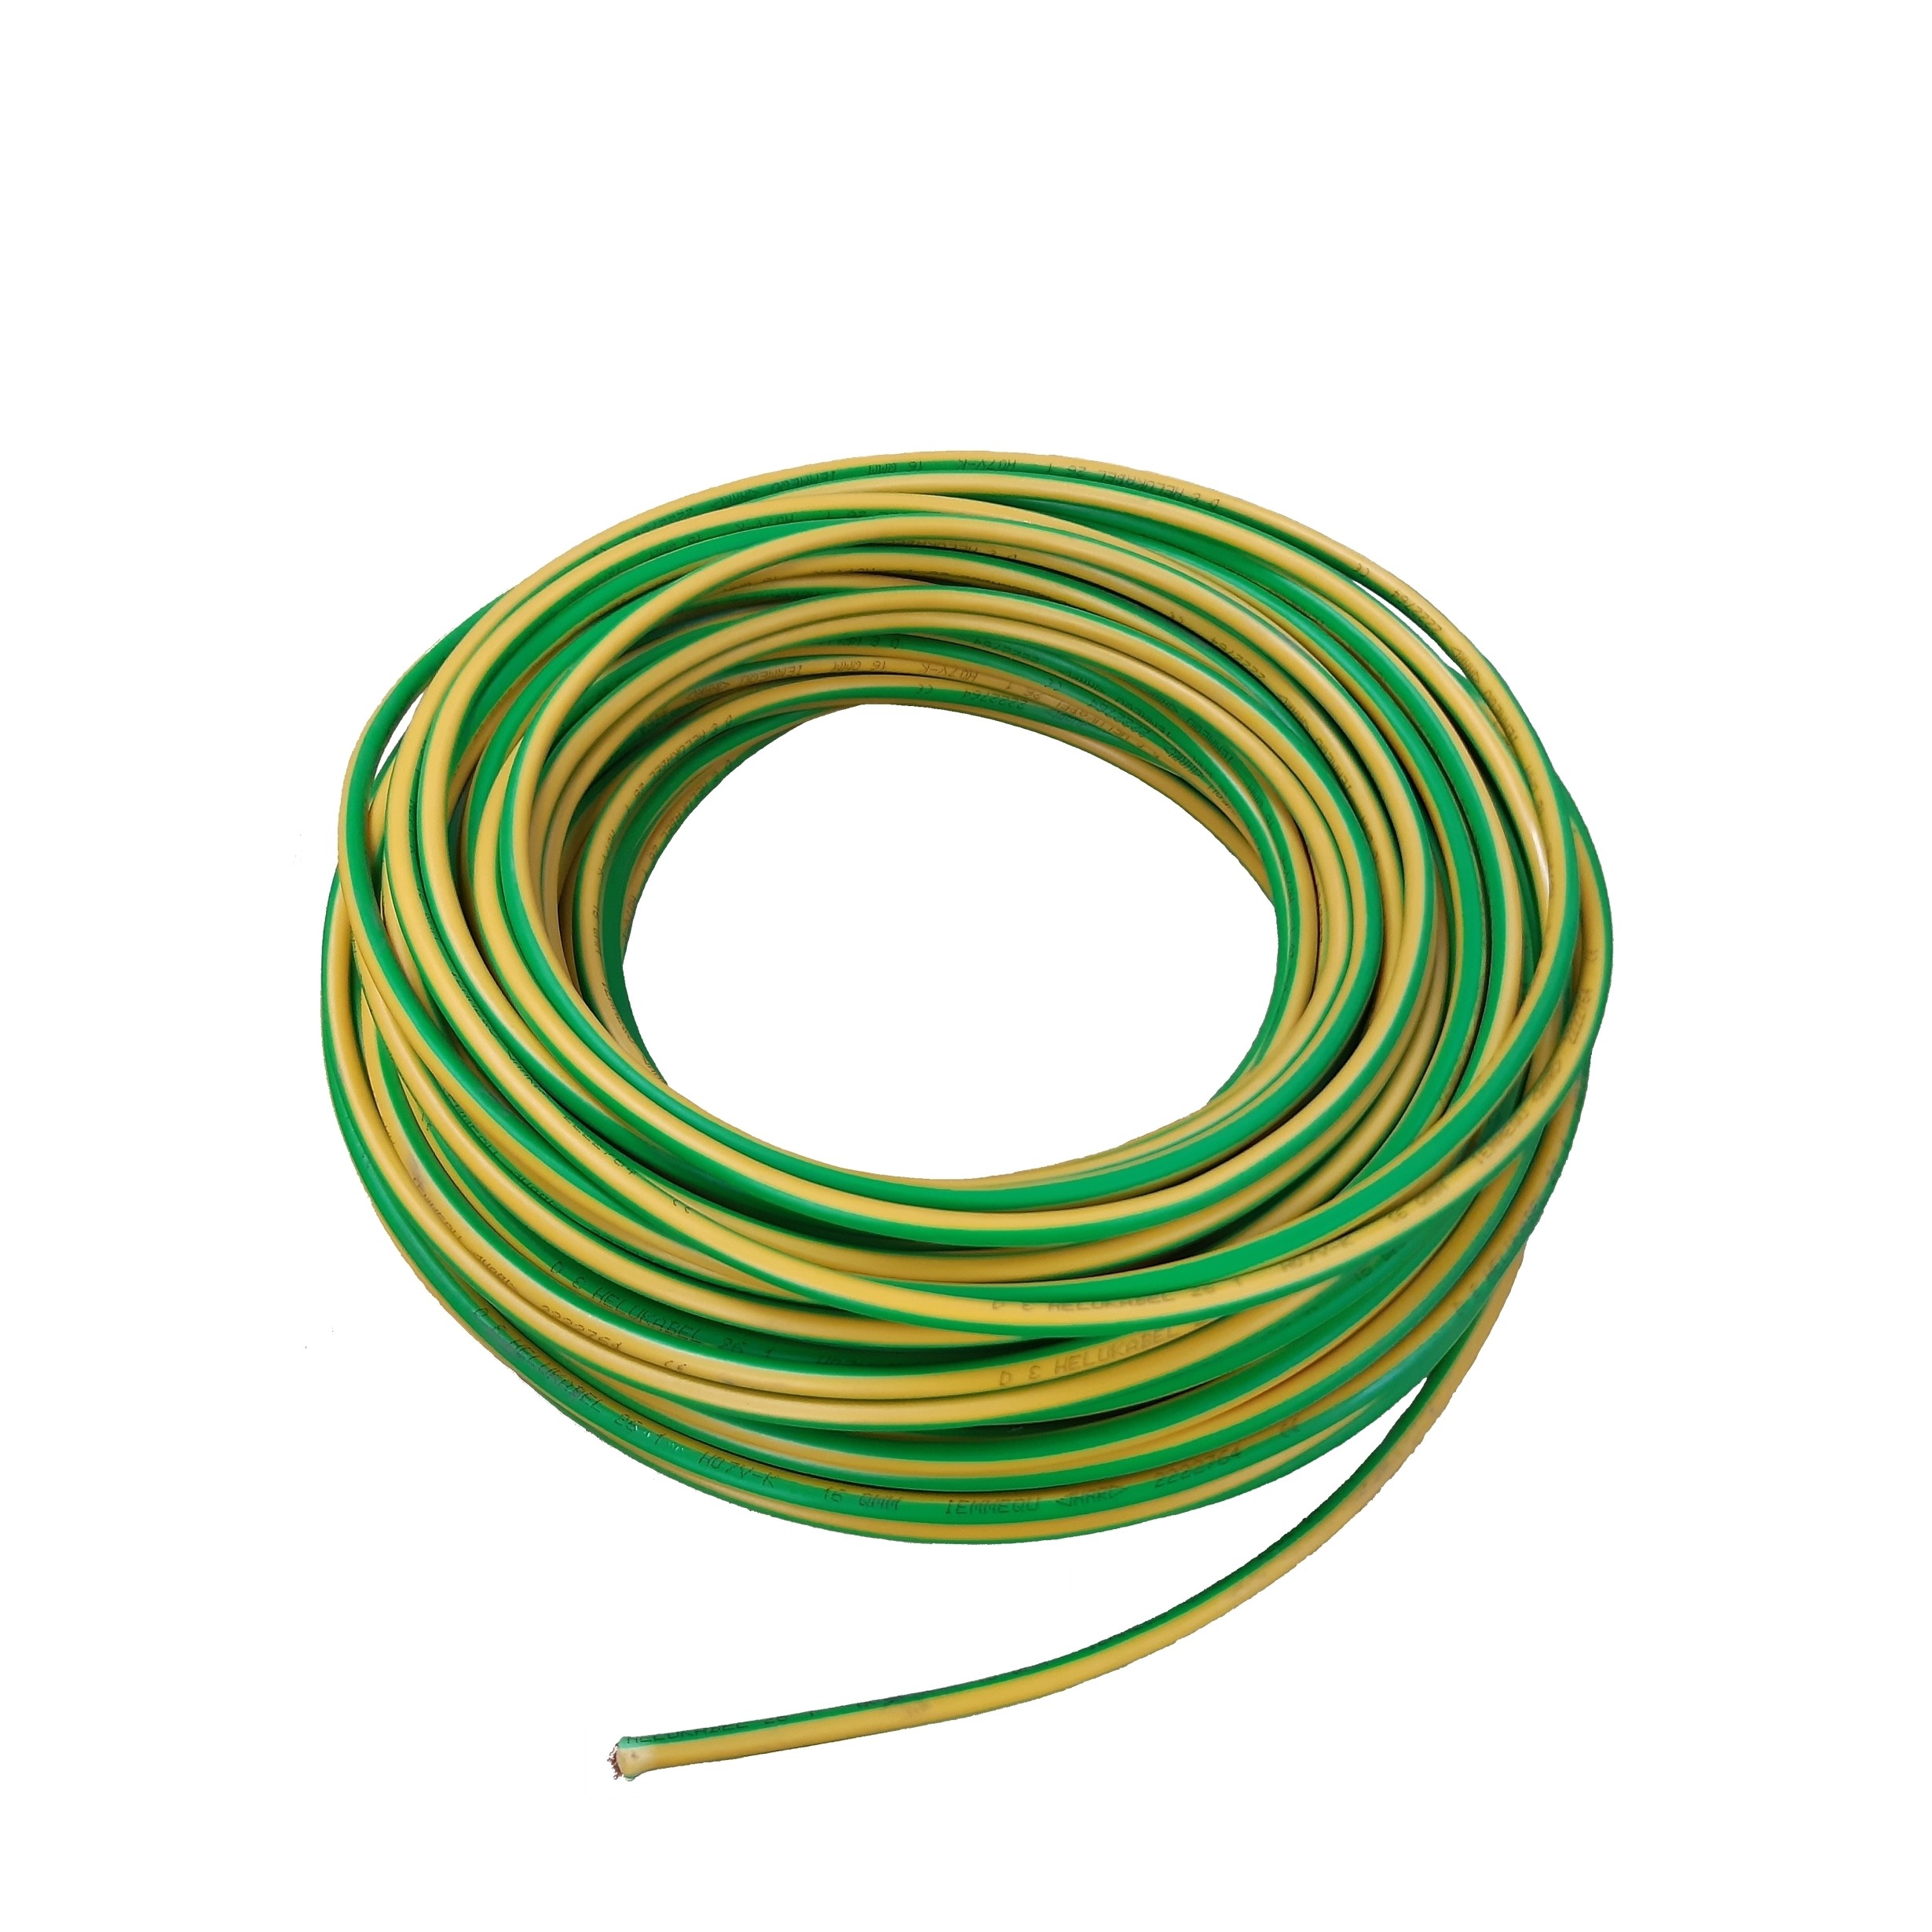 Kabel gelb-grün 16 mm2 100 m Helukabel